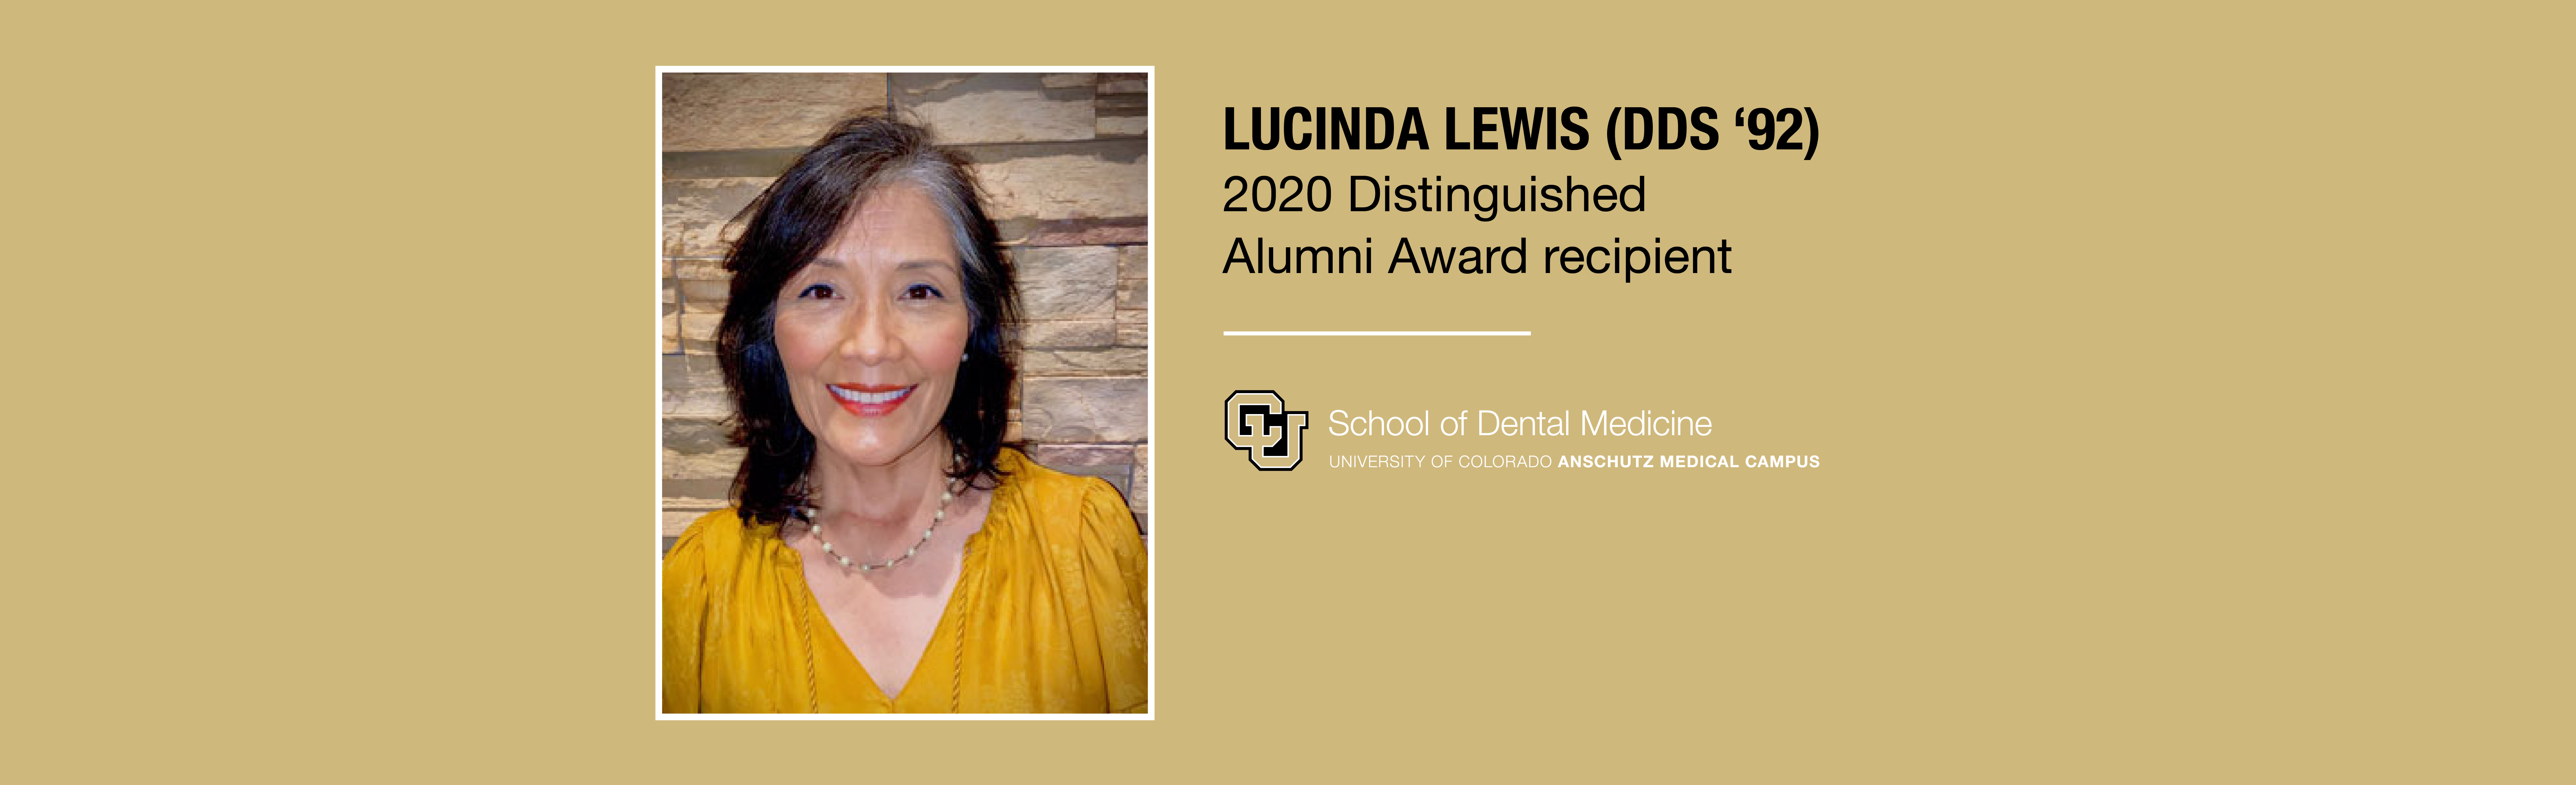 2020 Distinguished Alumni Award receipient, Lucinda Lewis (DDS '92)